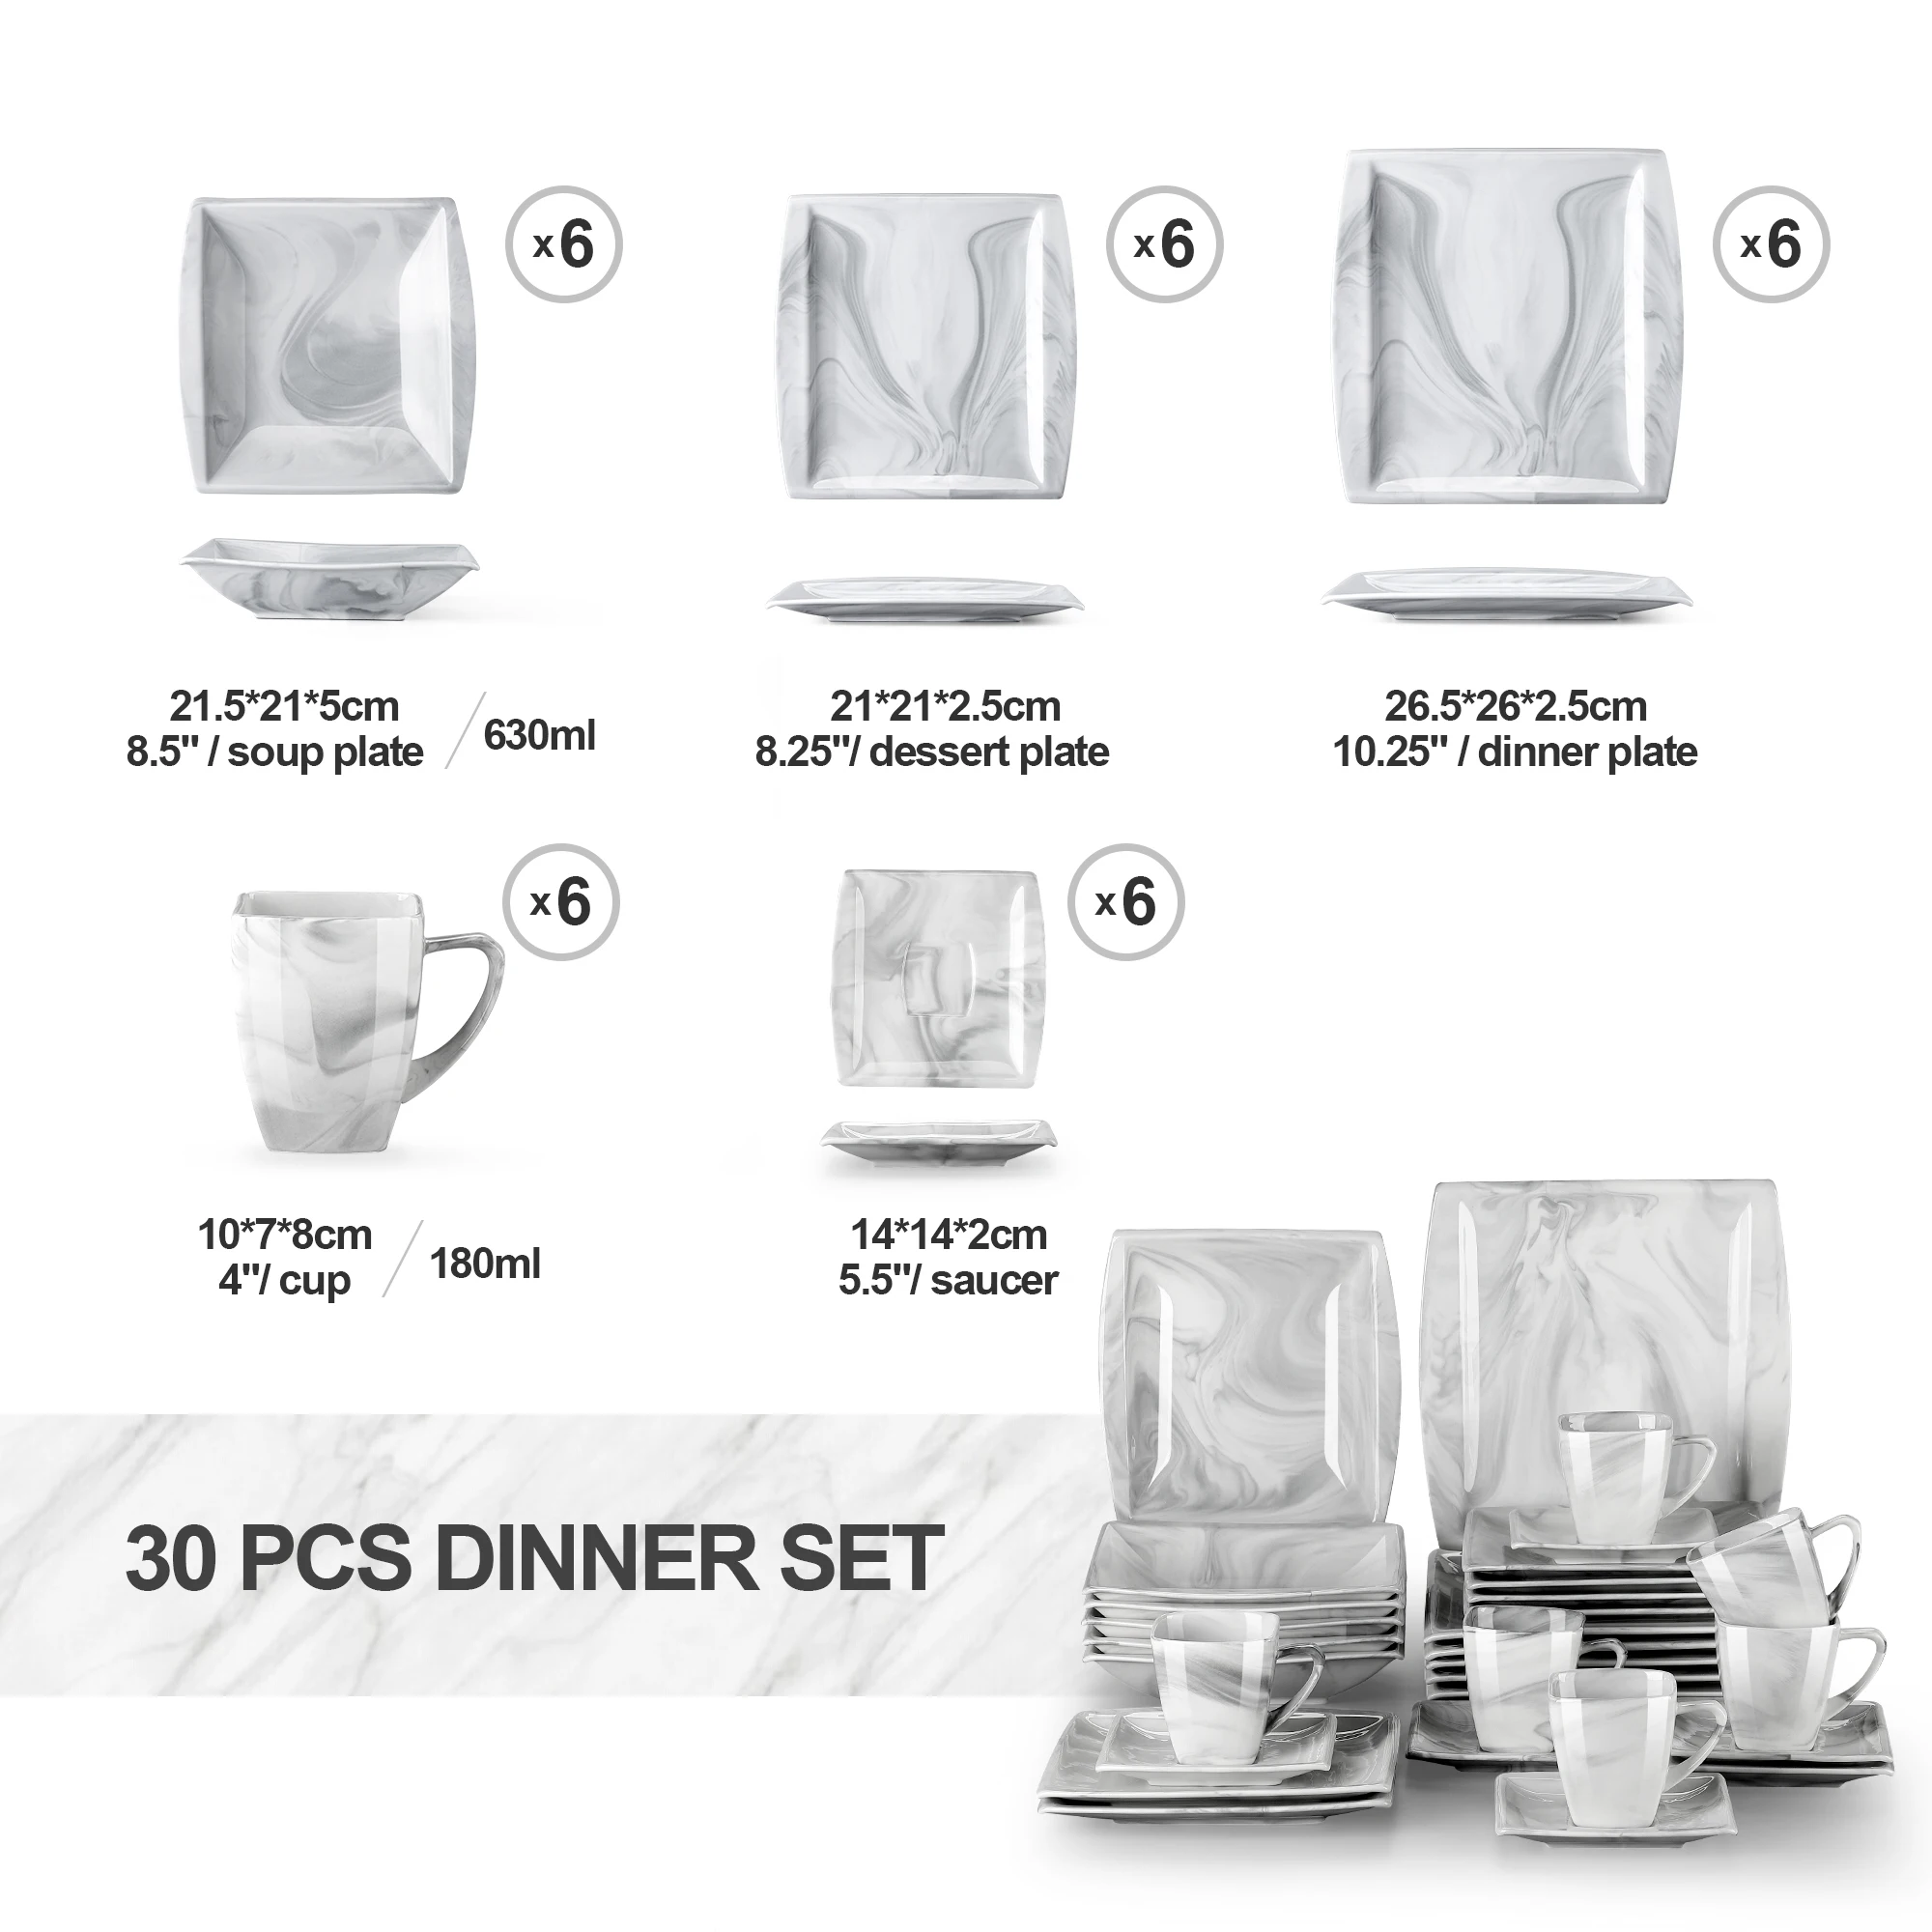 MALACASA 30-Piece Marble Porcelain Dinnerware Set with 6*Dinner